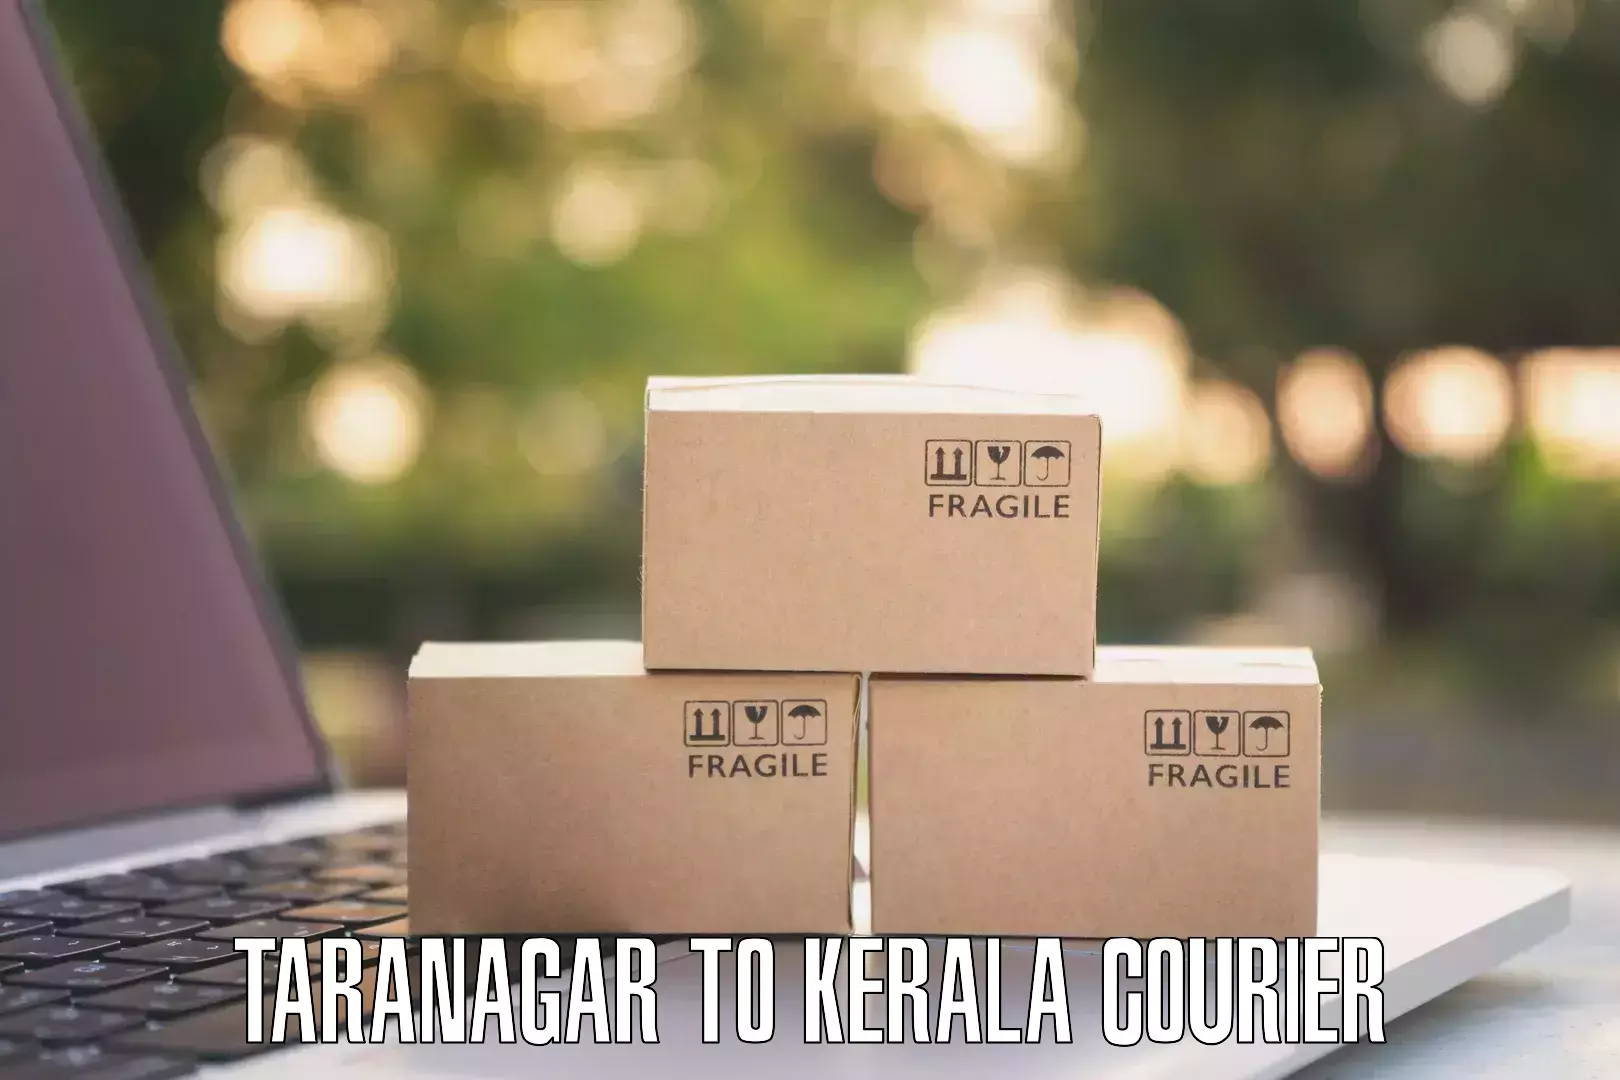 Express delivery capabilities Taranagar to Cherpulassery